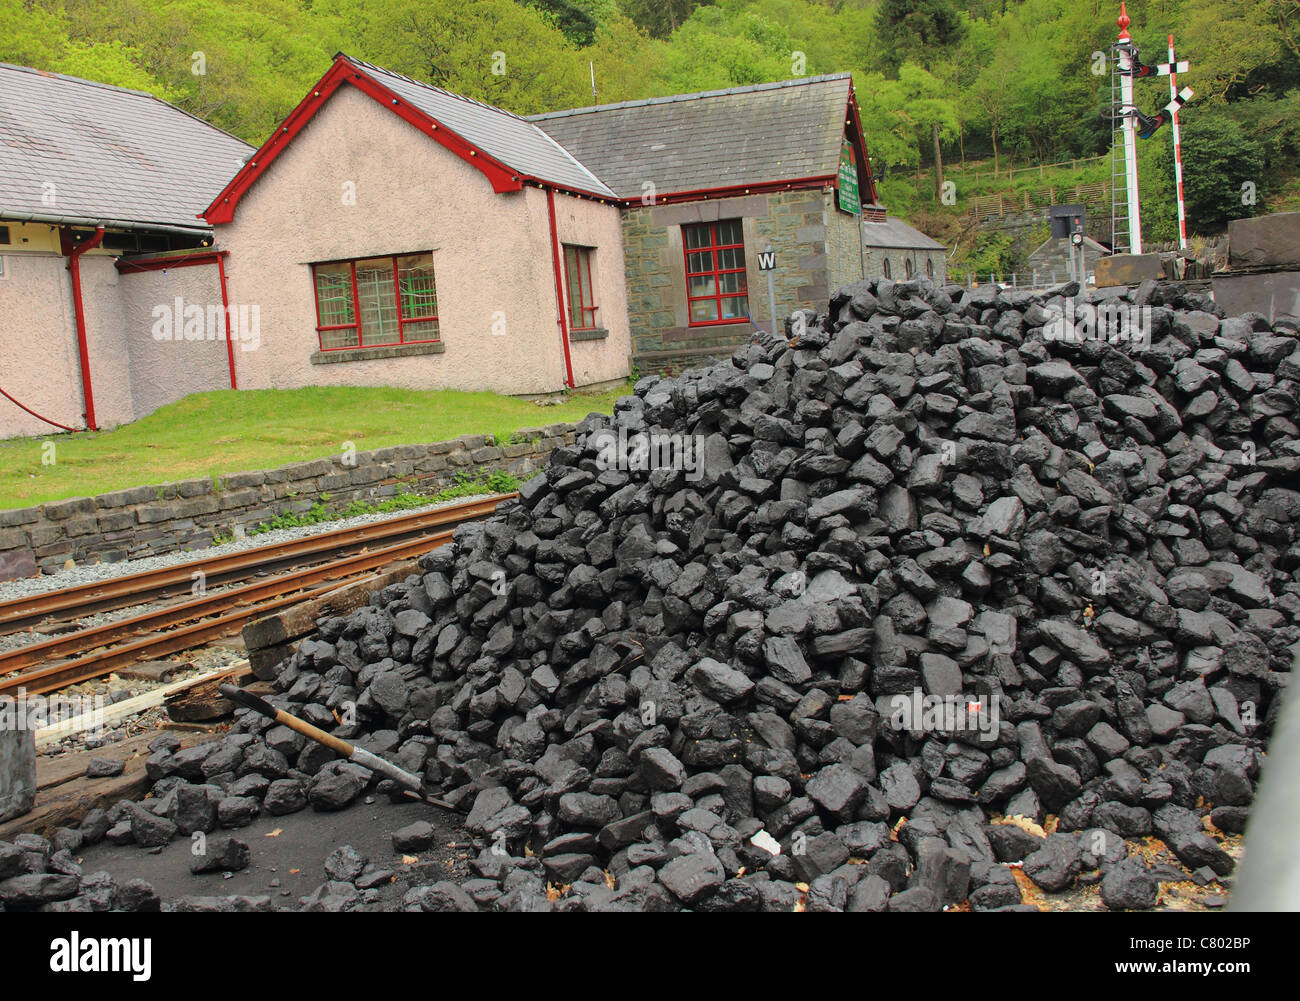 A pile of coal near a railway line Stock Photo